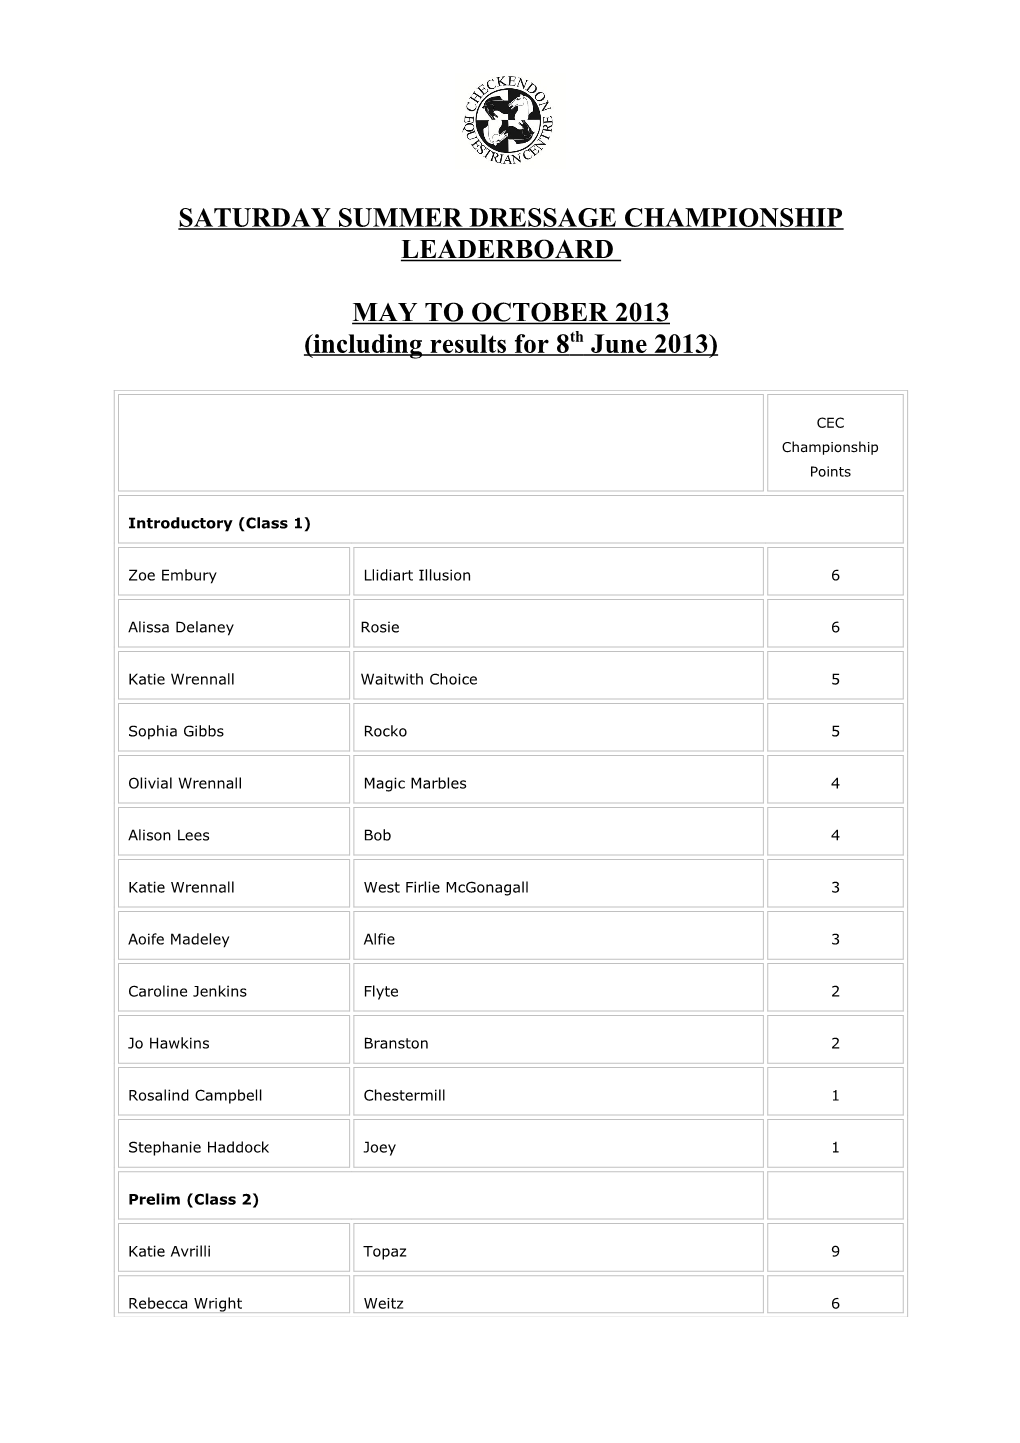 Saturday Summer Dressage Championship Leaderboard